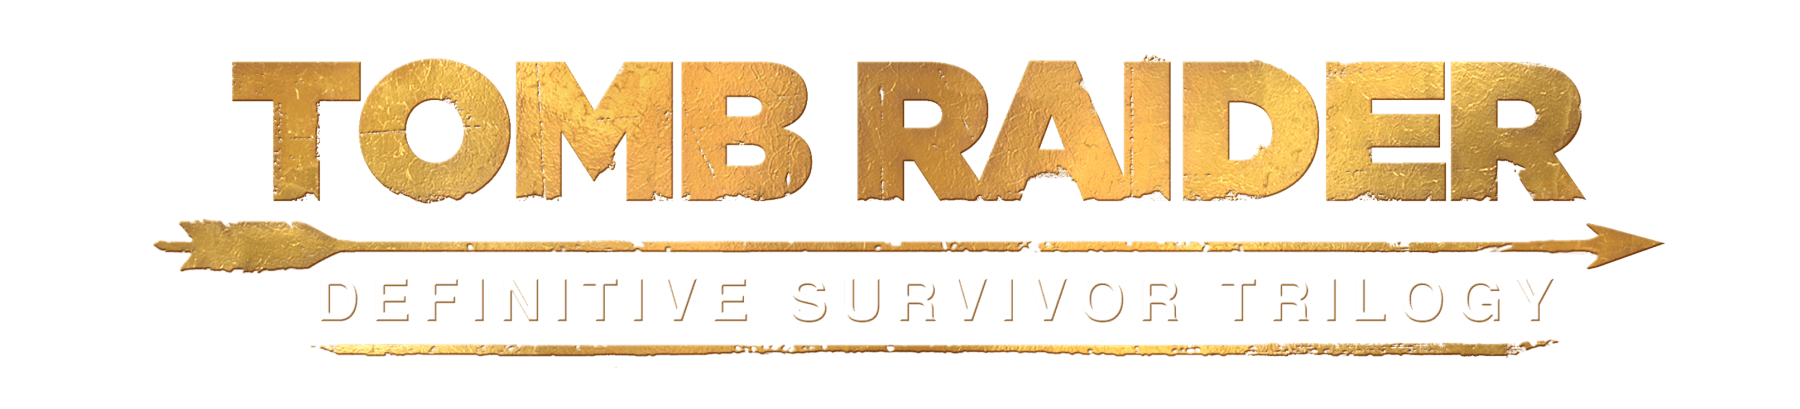 Tomb Raider Definitive Survivor Trilogy logo